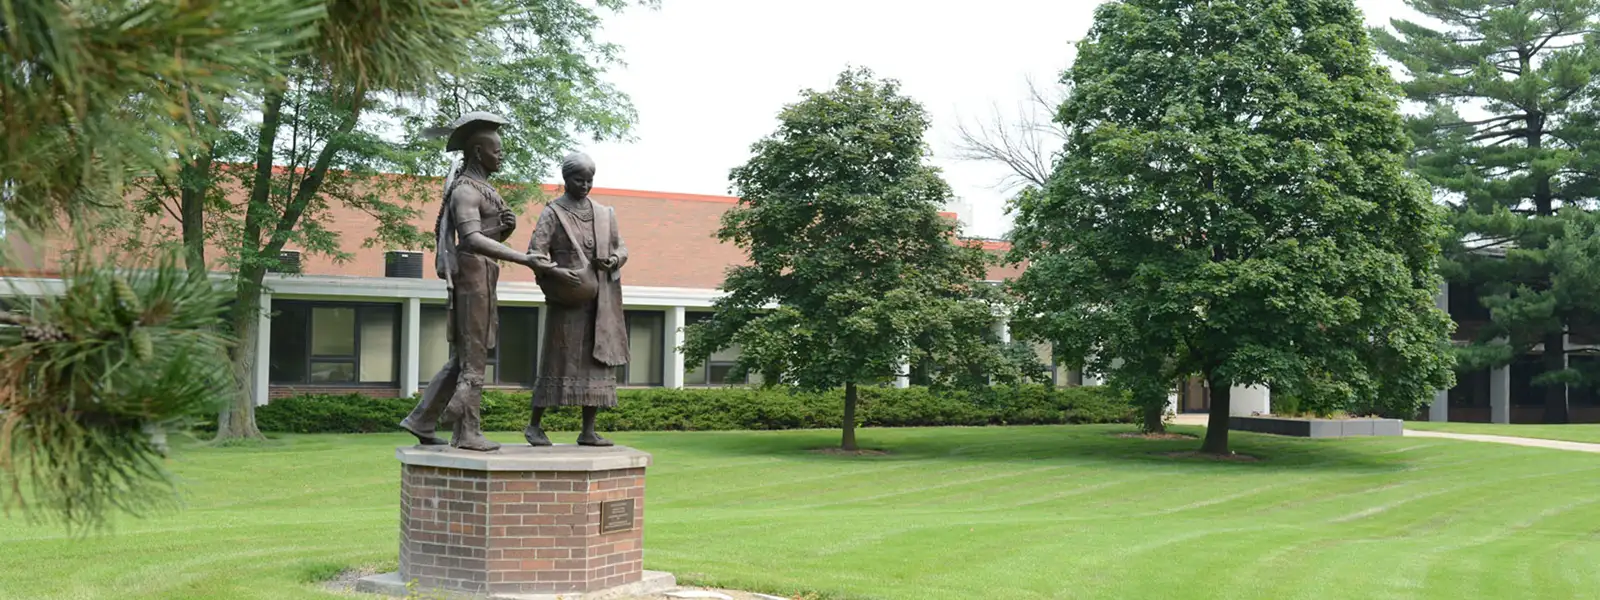 Statue at the Ottumwa campus